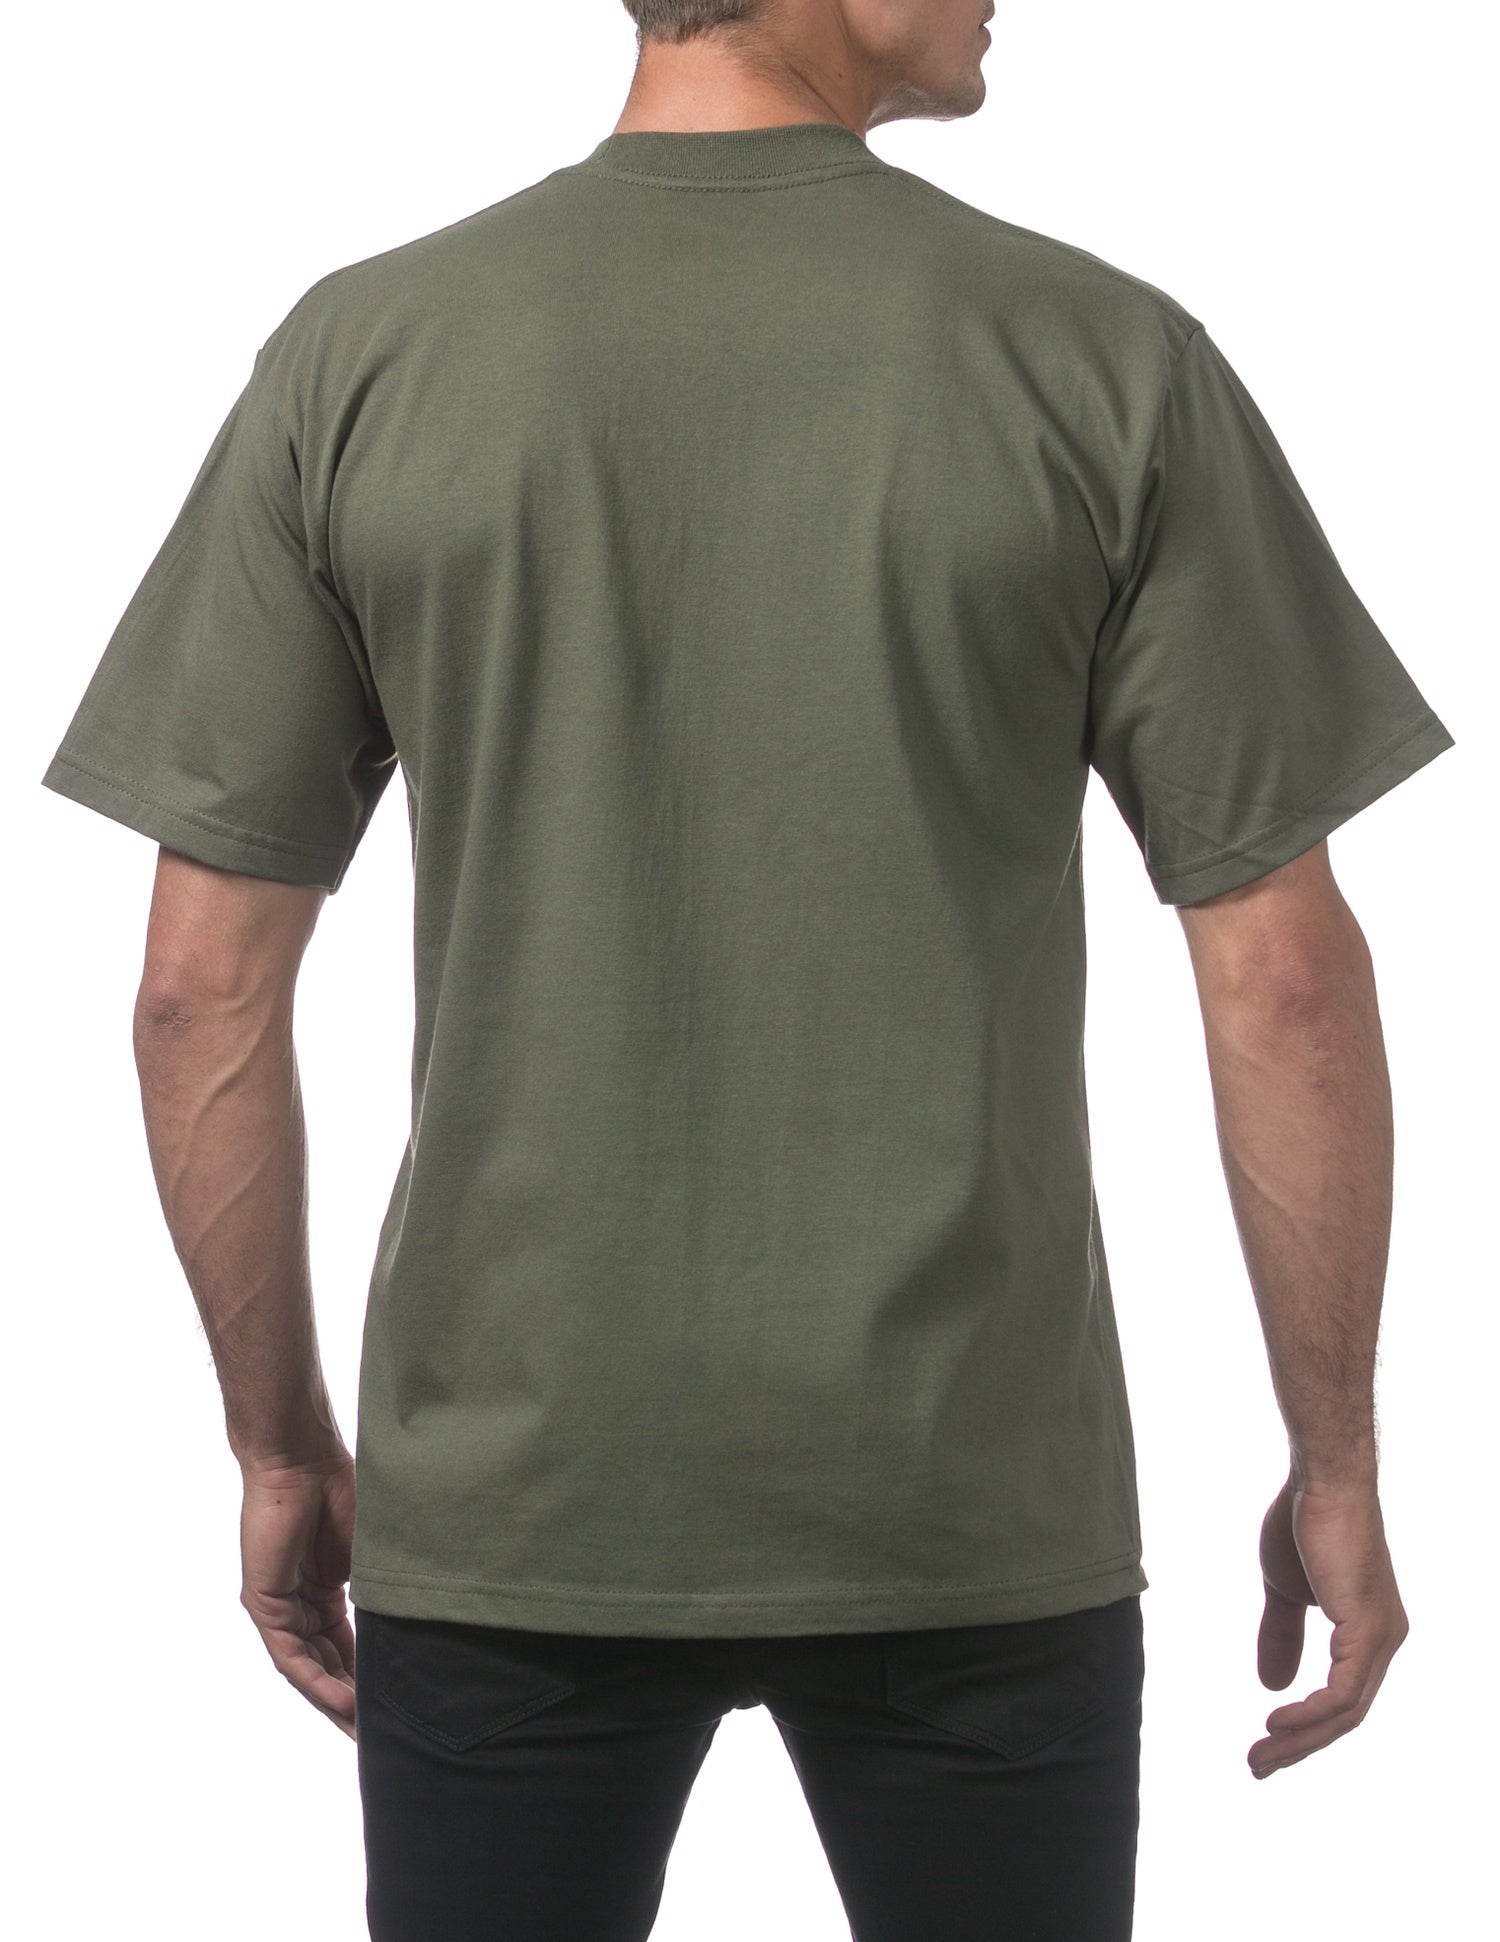 Olive Pro Club Men's Heavyweight Short Sleeve T-Shirt